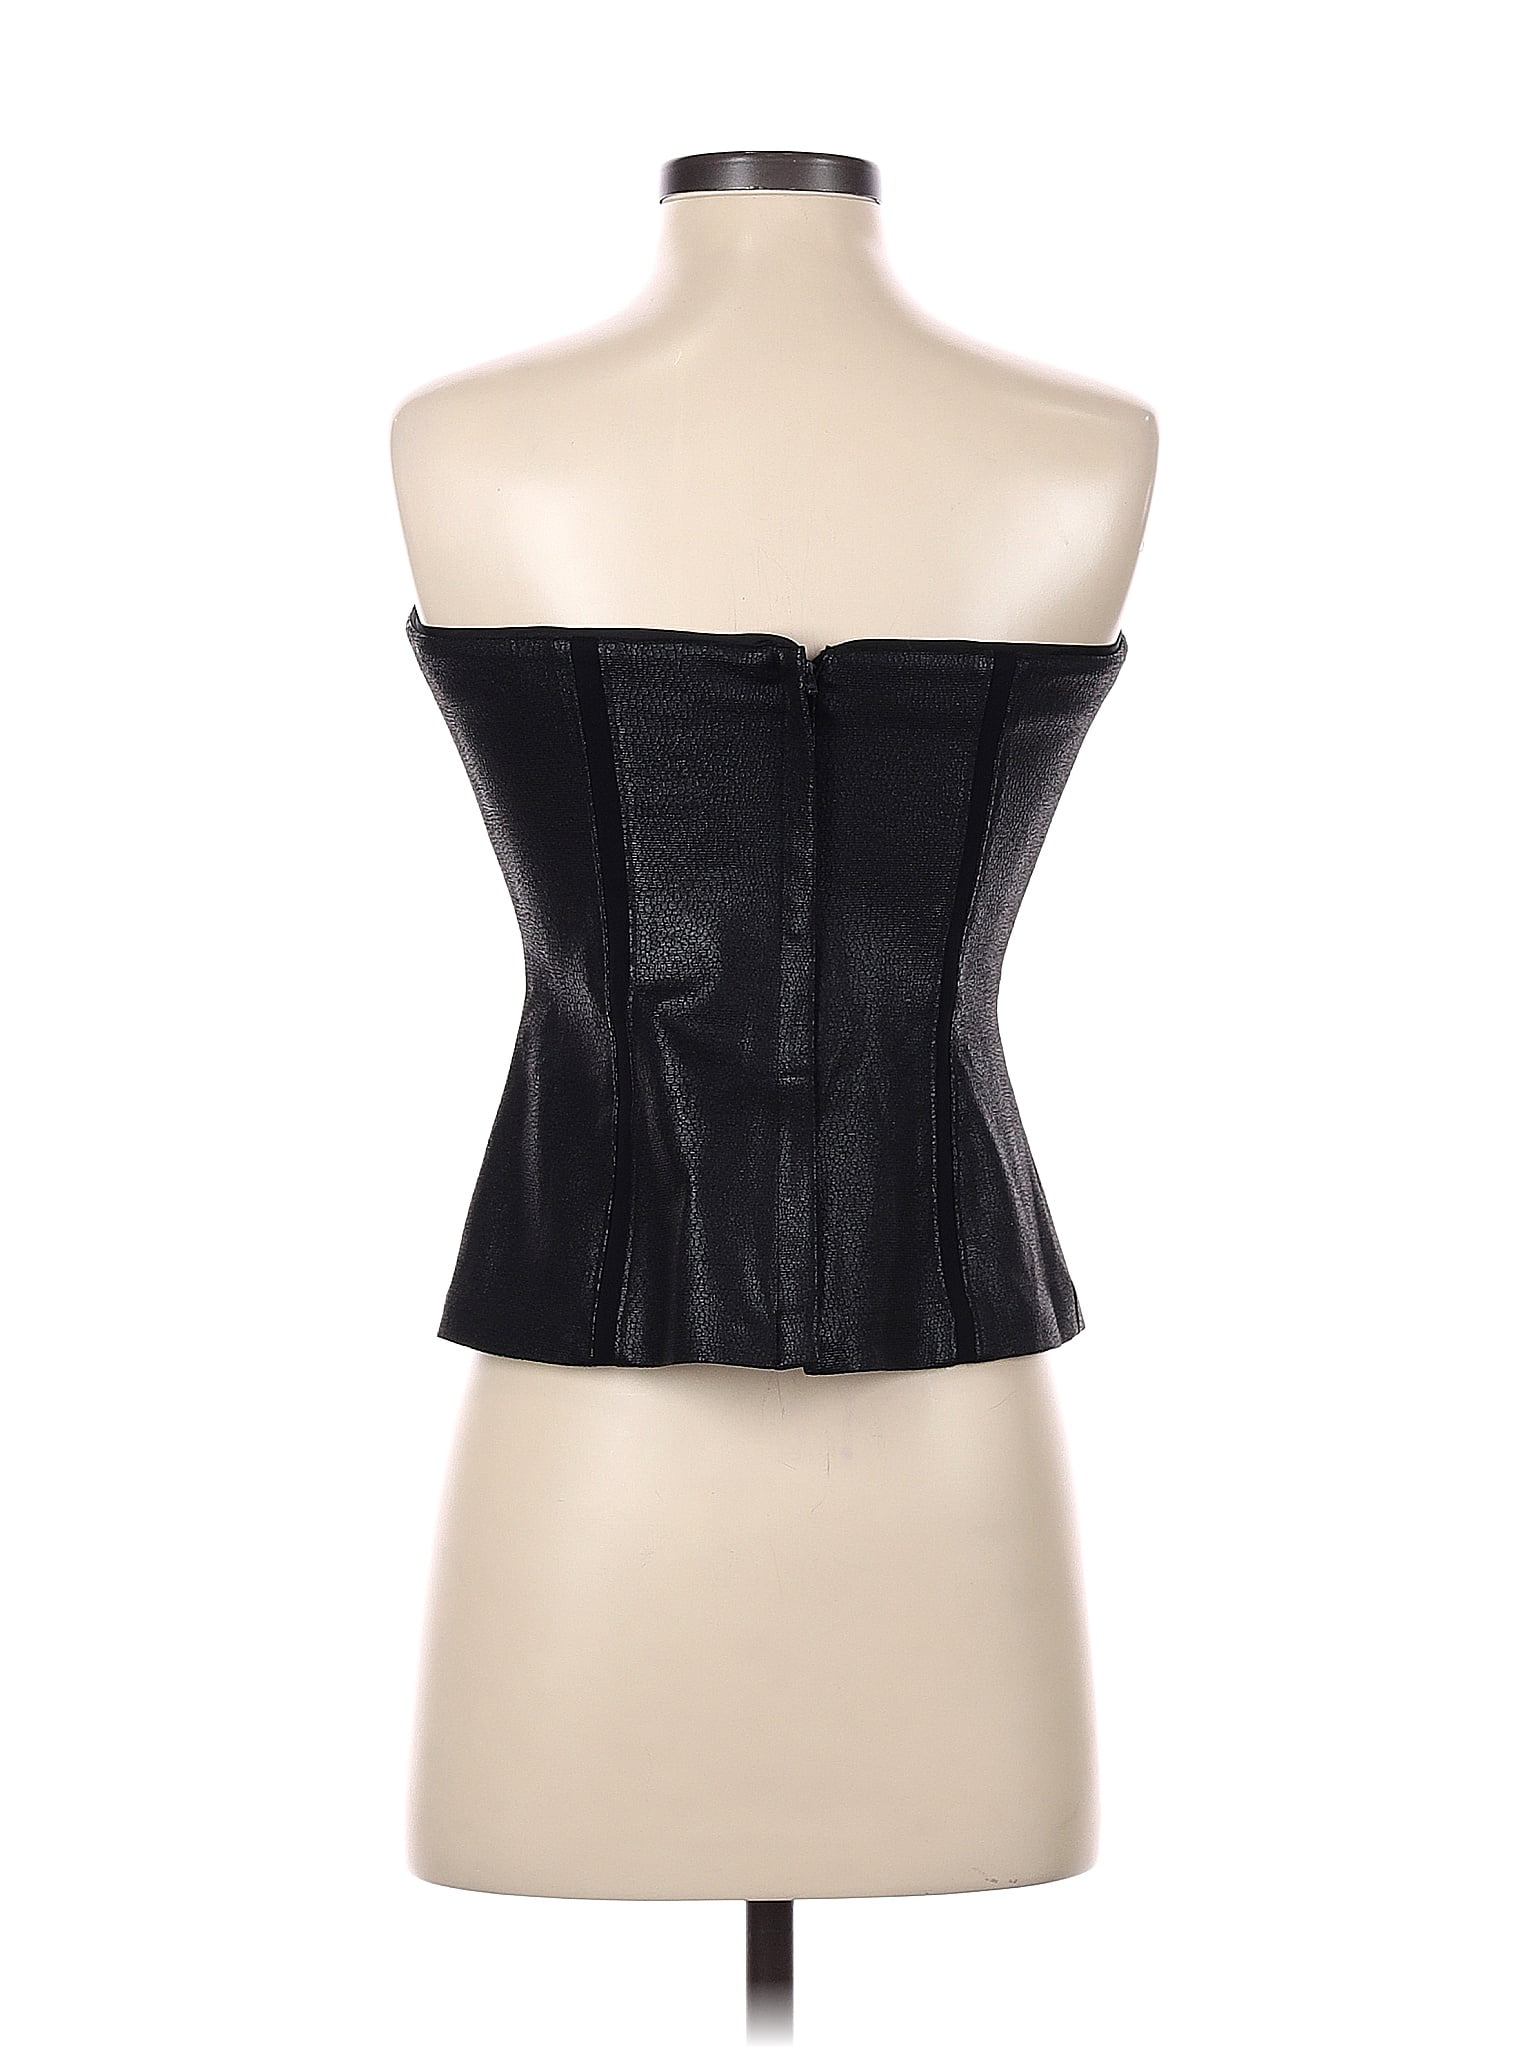 Black strapless satin corset top